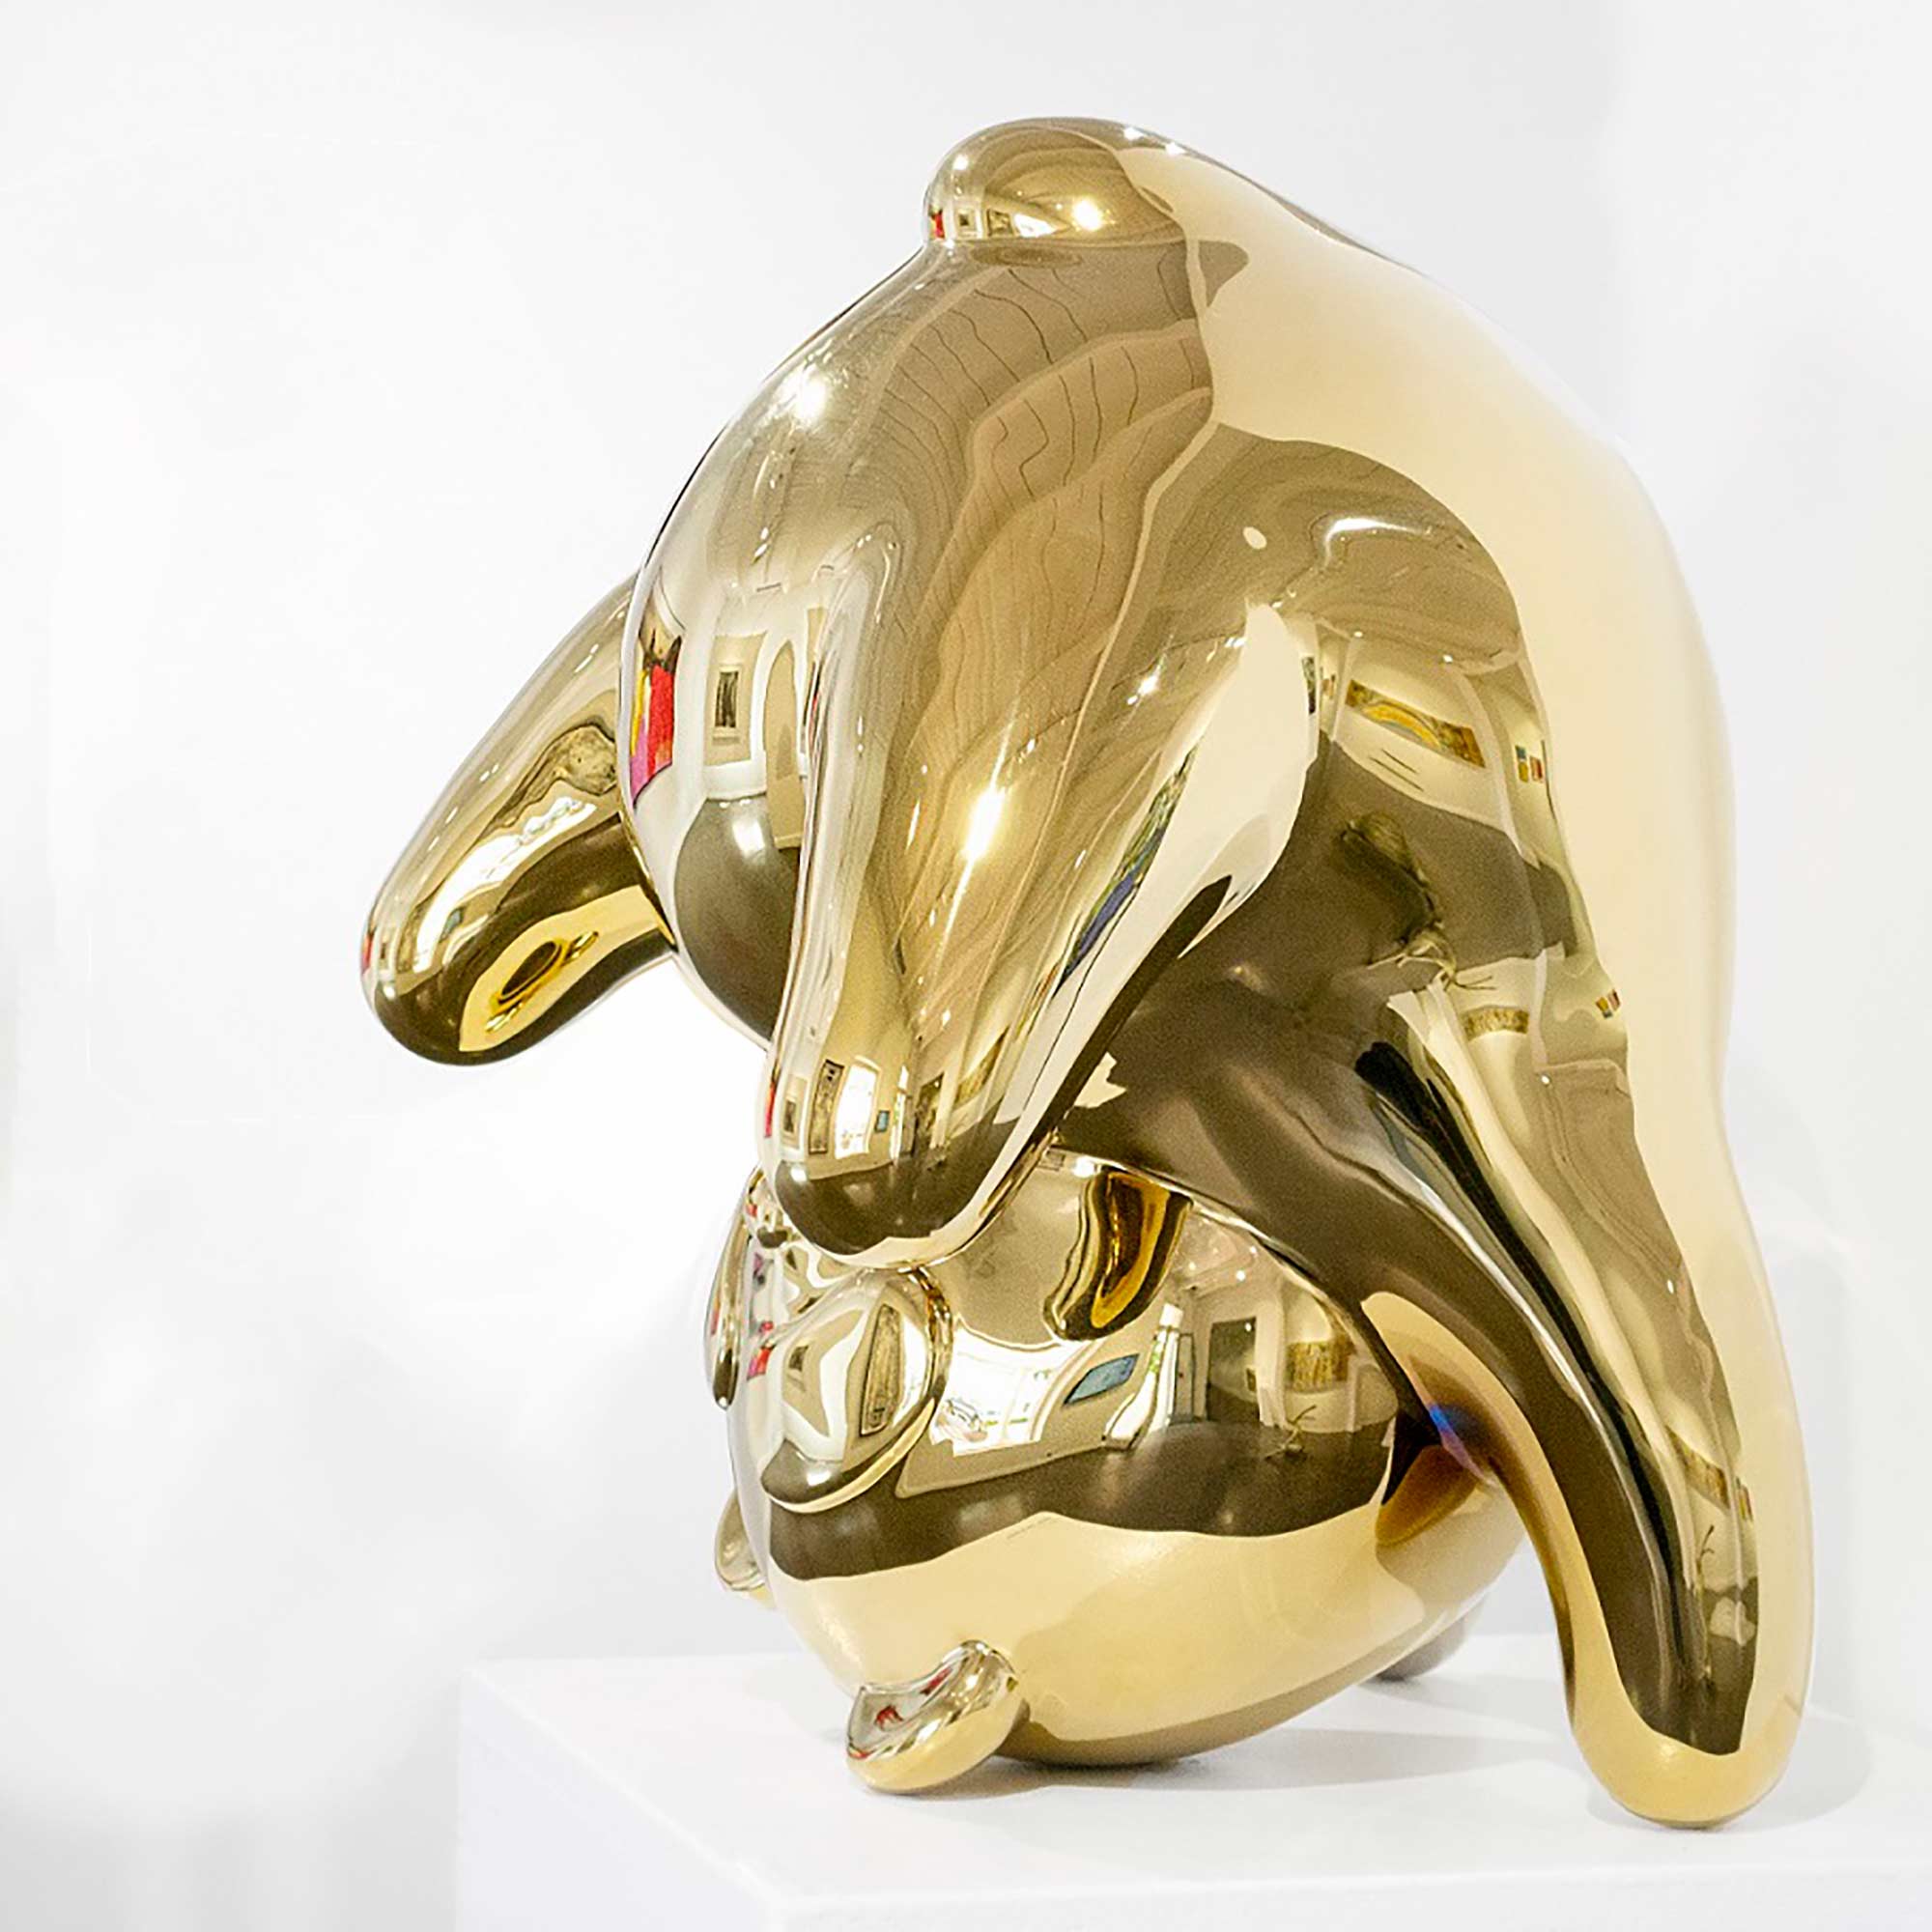 Panda-monium, gold coated Mirror Polished Stainless Steel Sculpture, by artist Ferdi B Dick, side view 